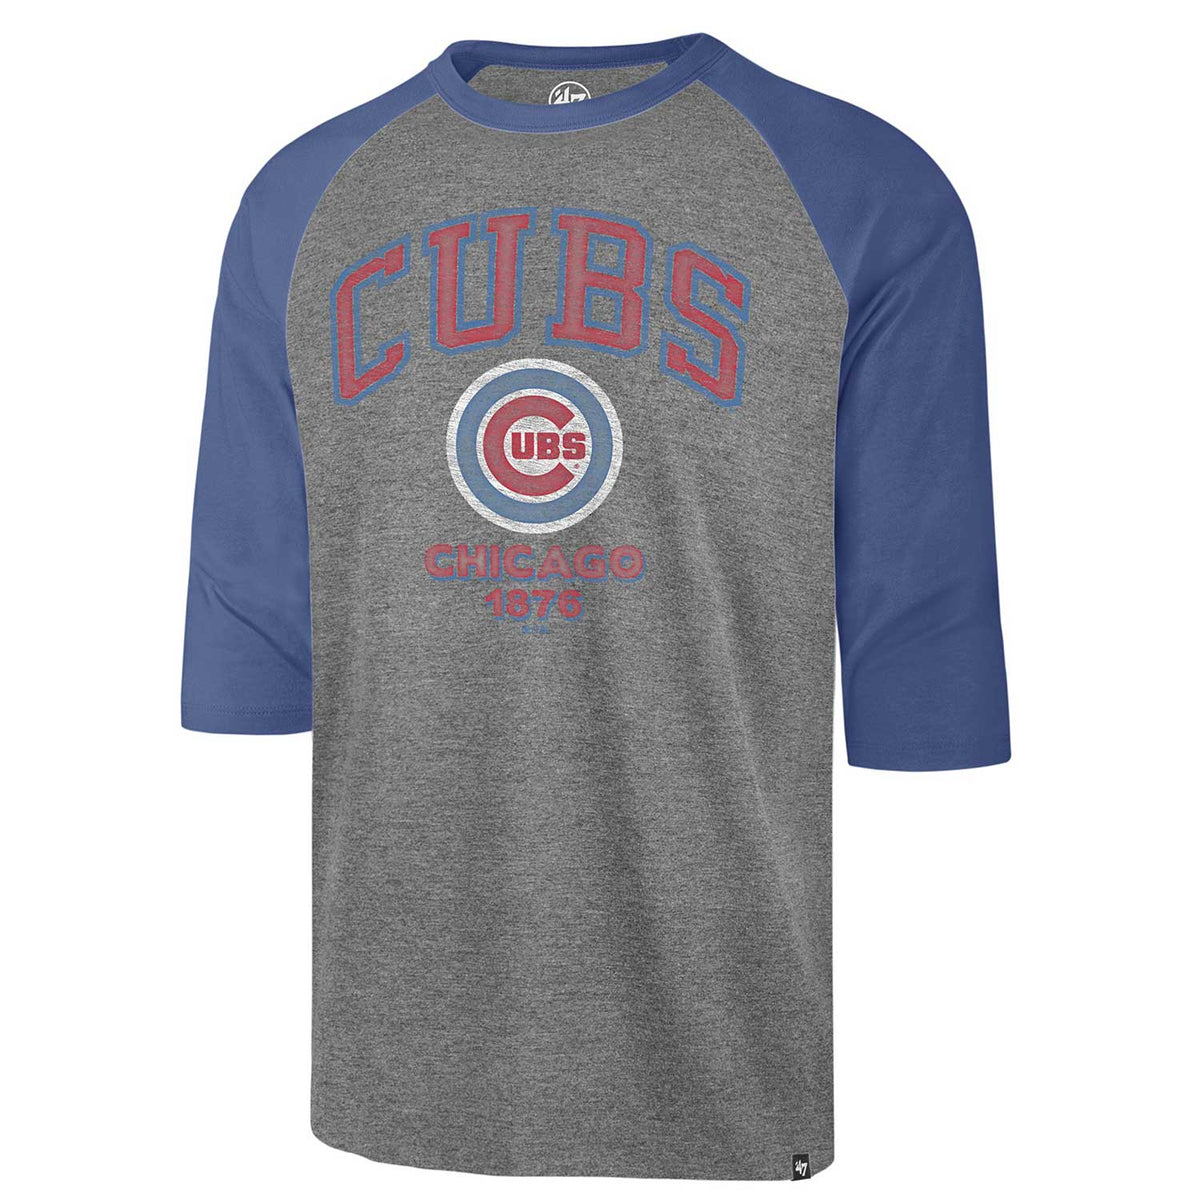 Nike Chicago Cubs 1911 Rewind Raglan 3/4-Sleeve T-Shirt XX-Large